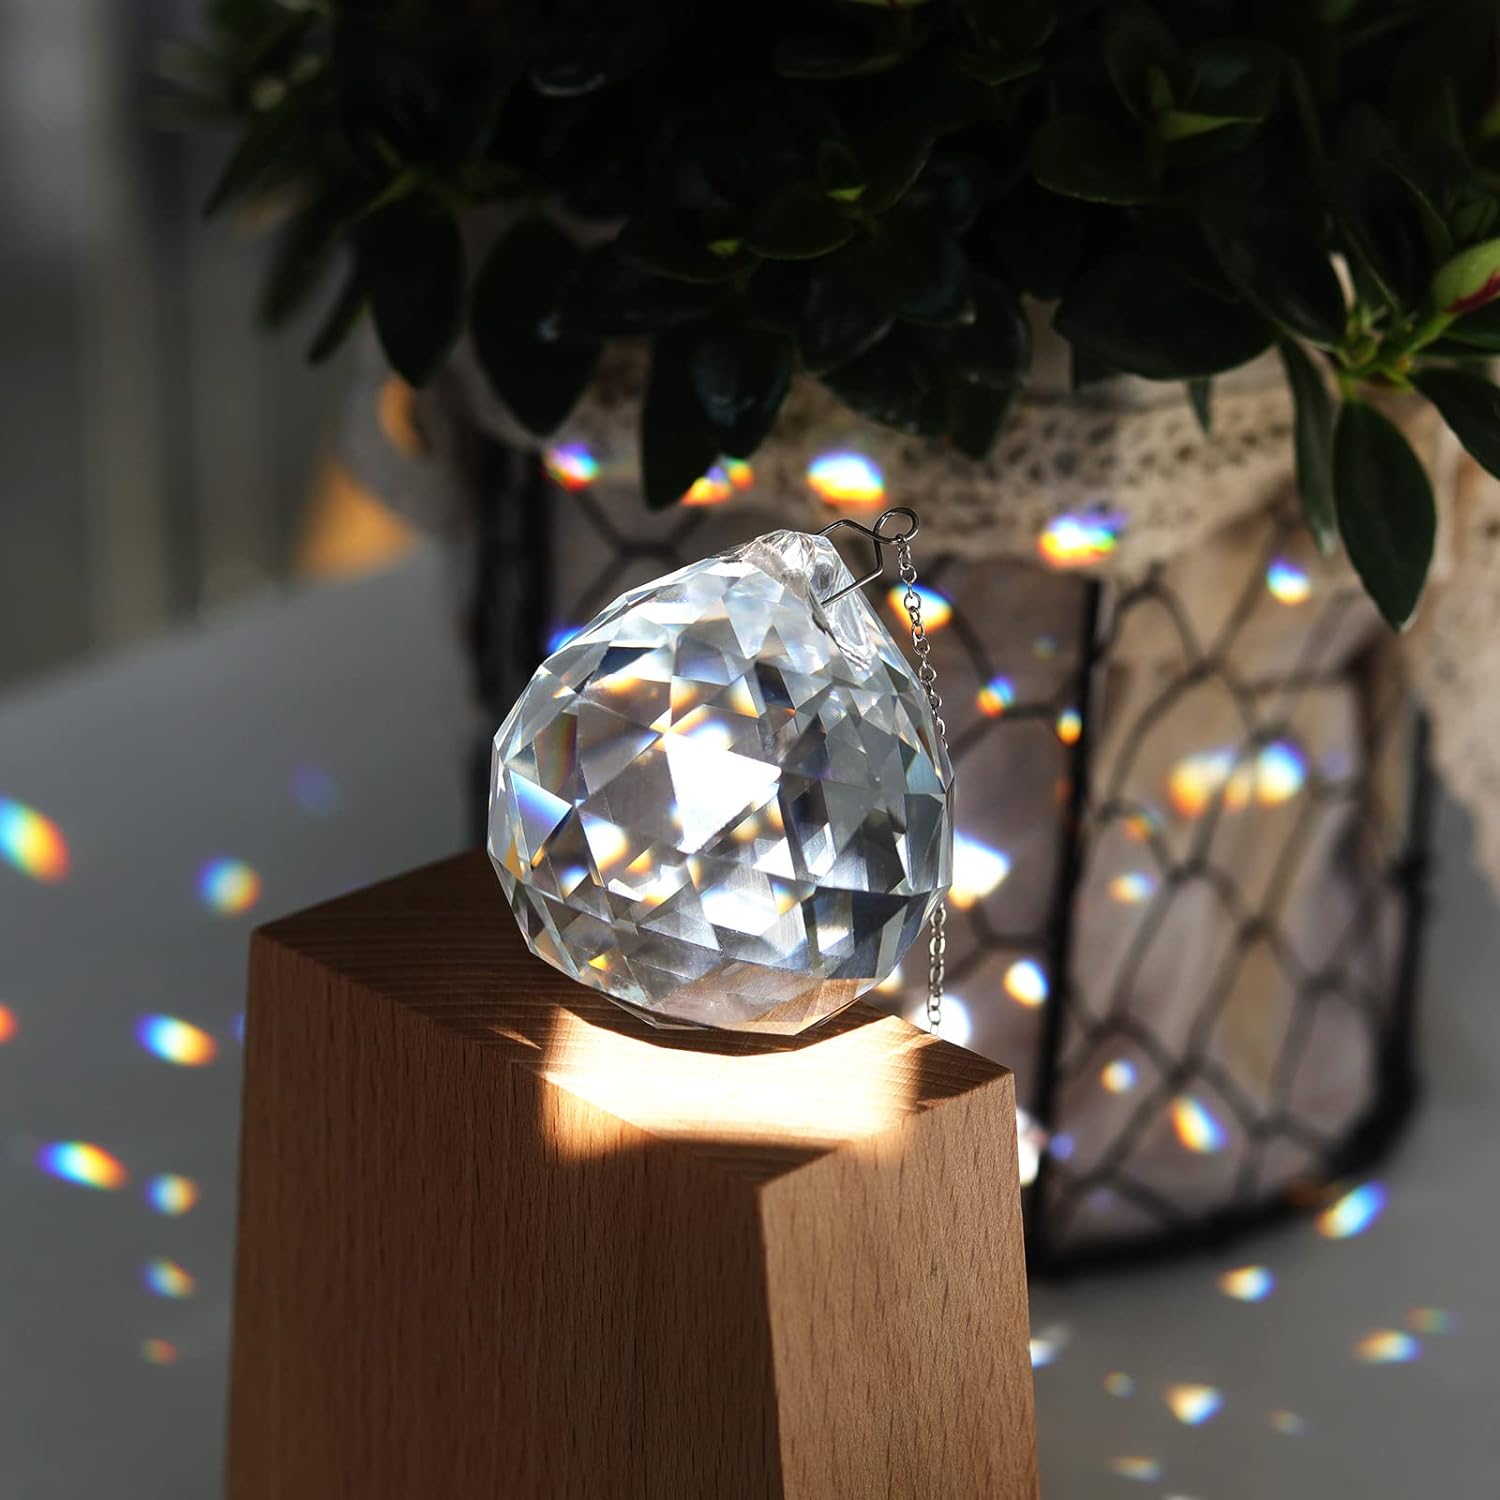 Sale 1pcs 40mm Clear Glass Crystal Ball Prism Pendant Decor Lamp Lighting 